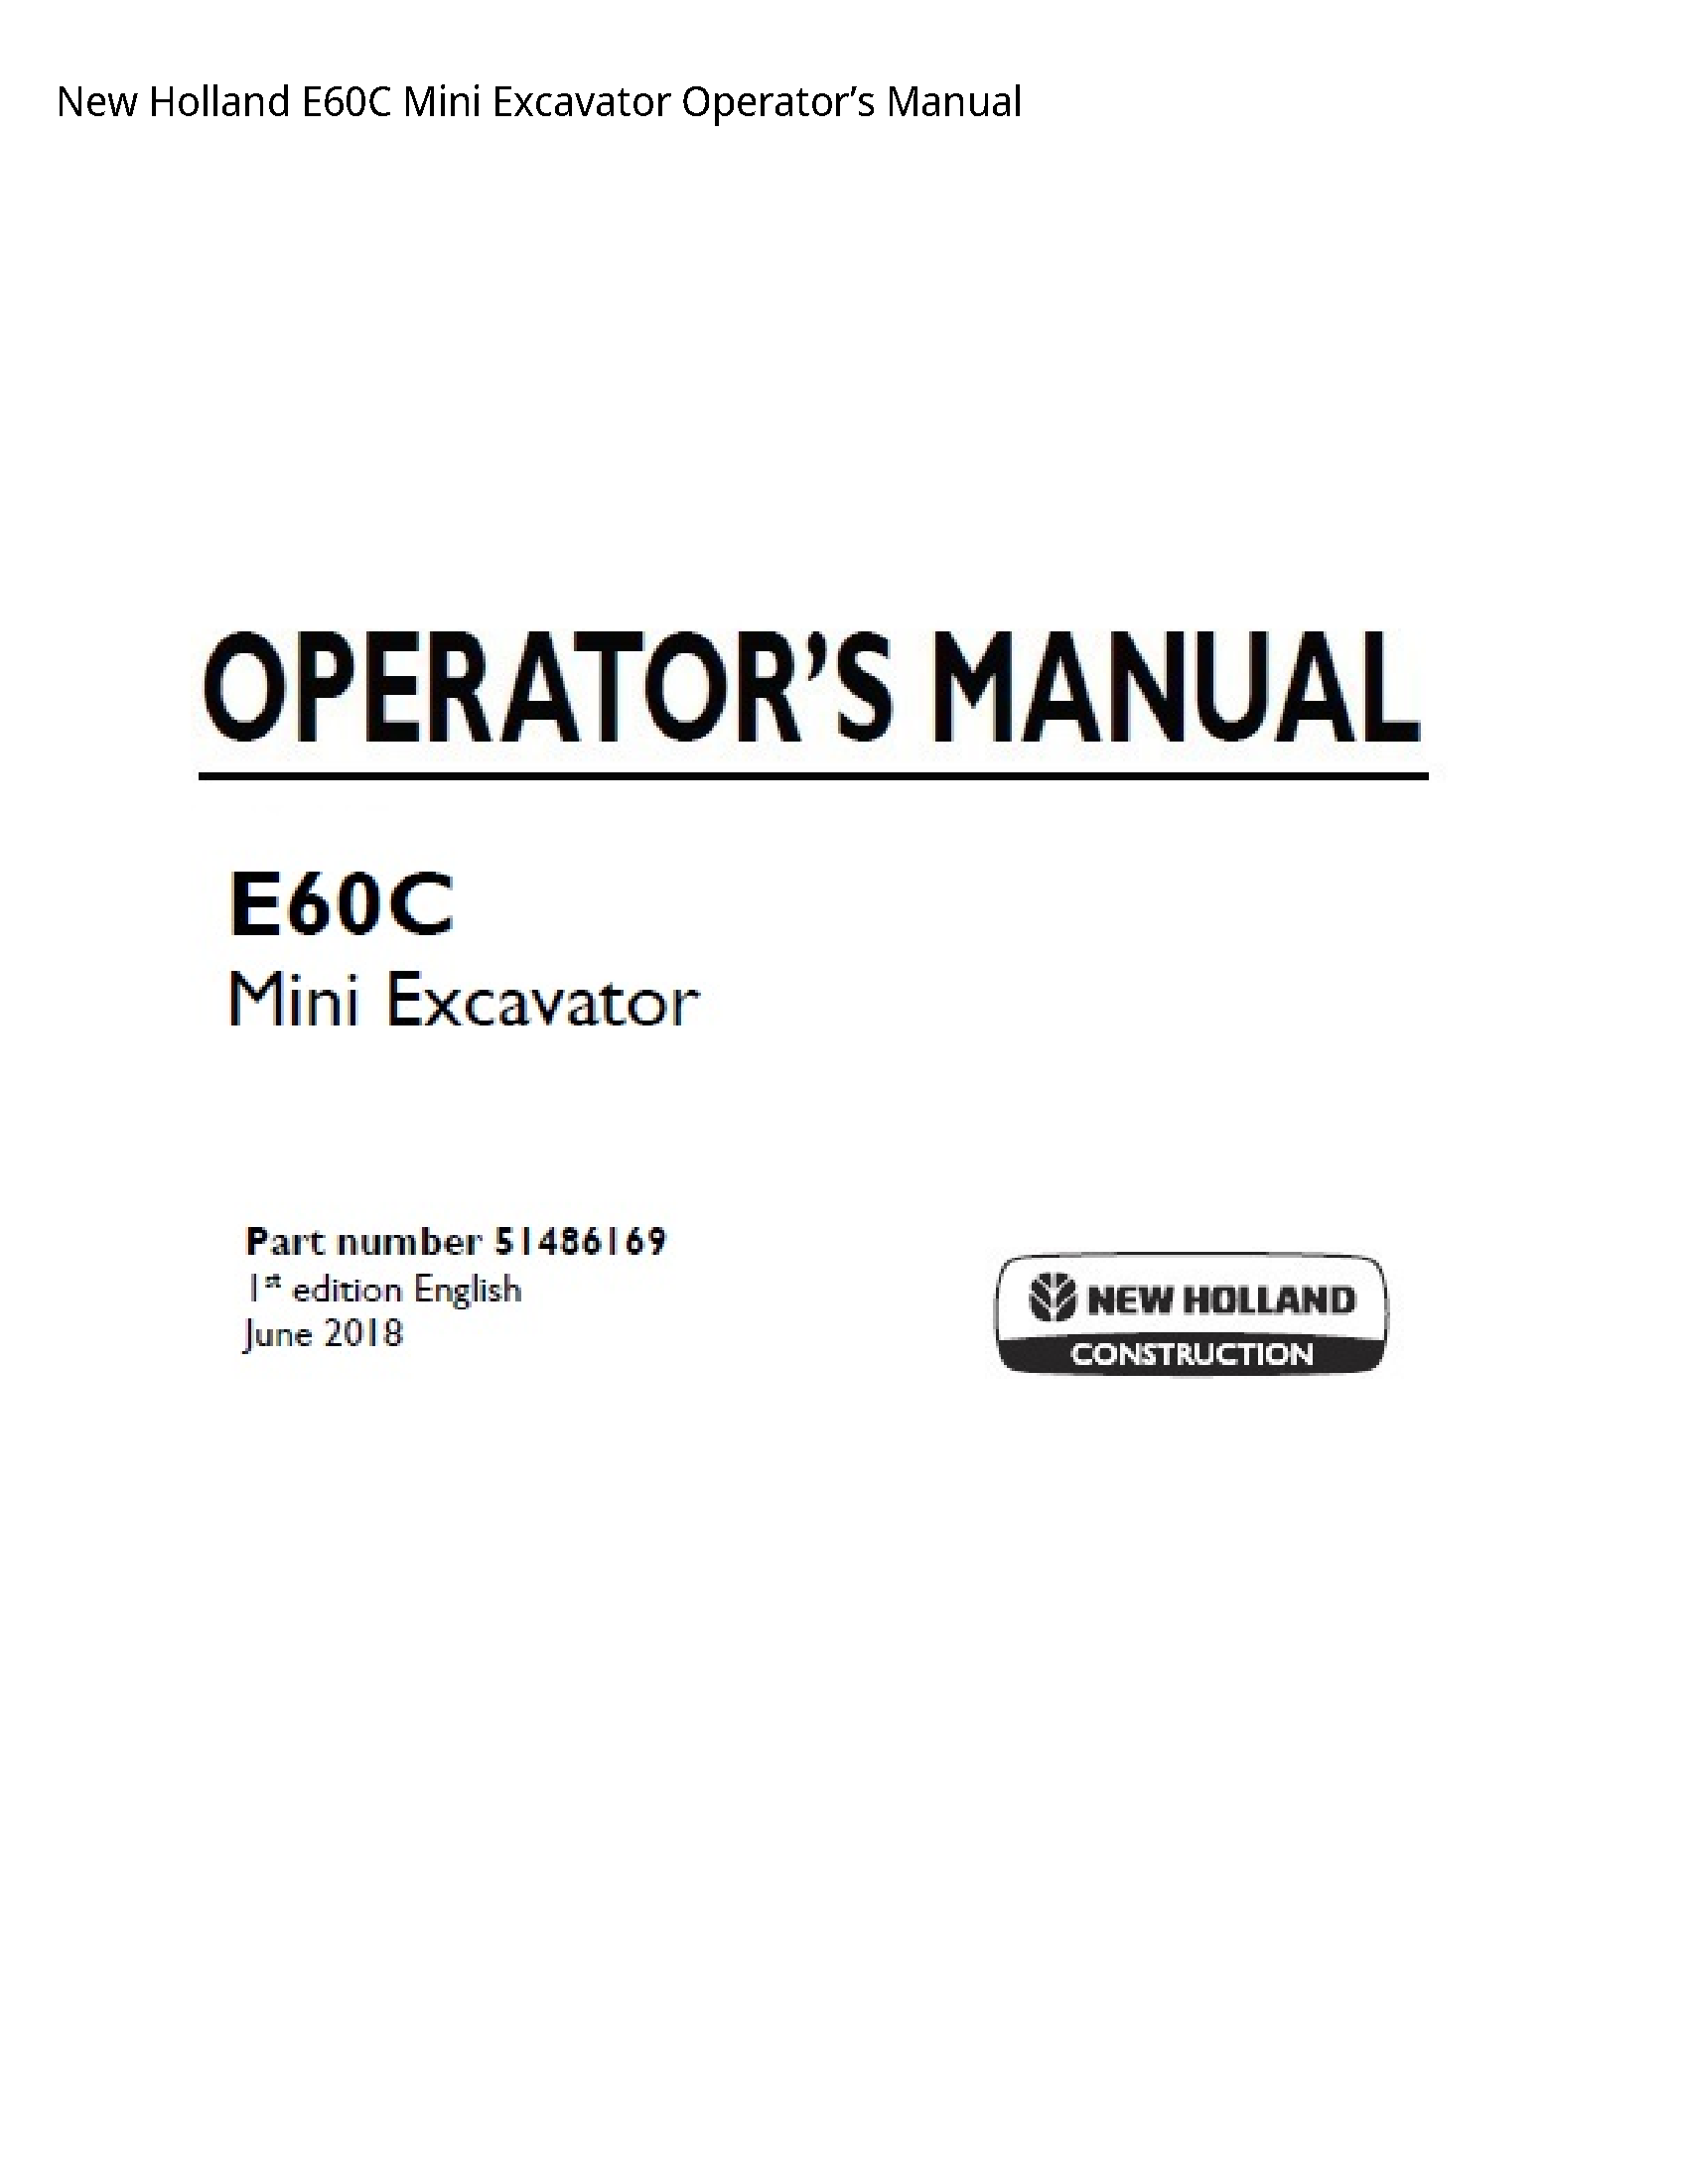 New Holland E60C Mini Excavator Operator’s manual